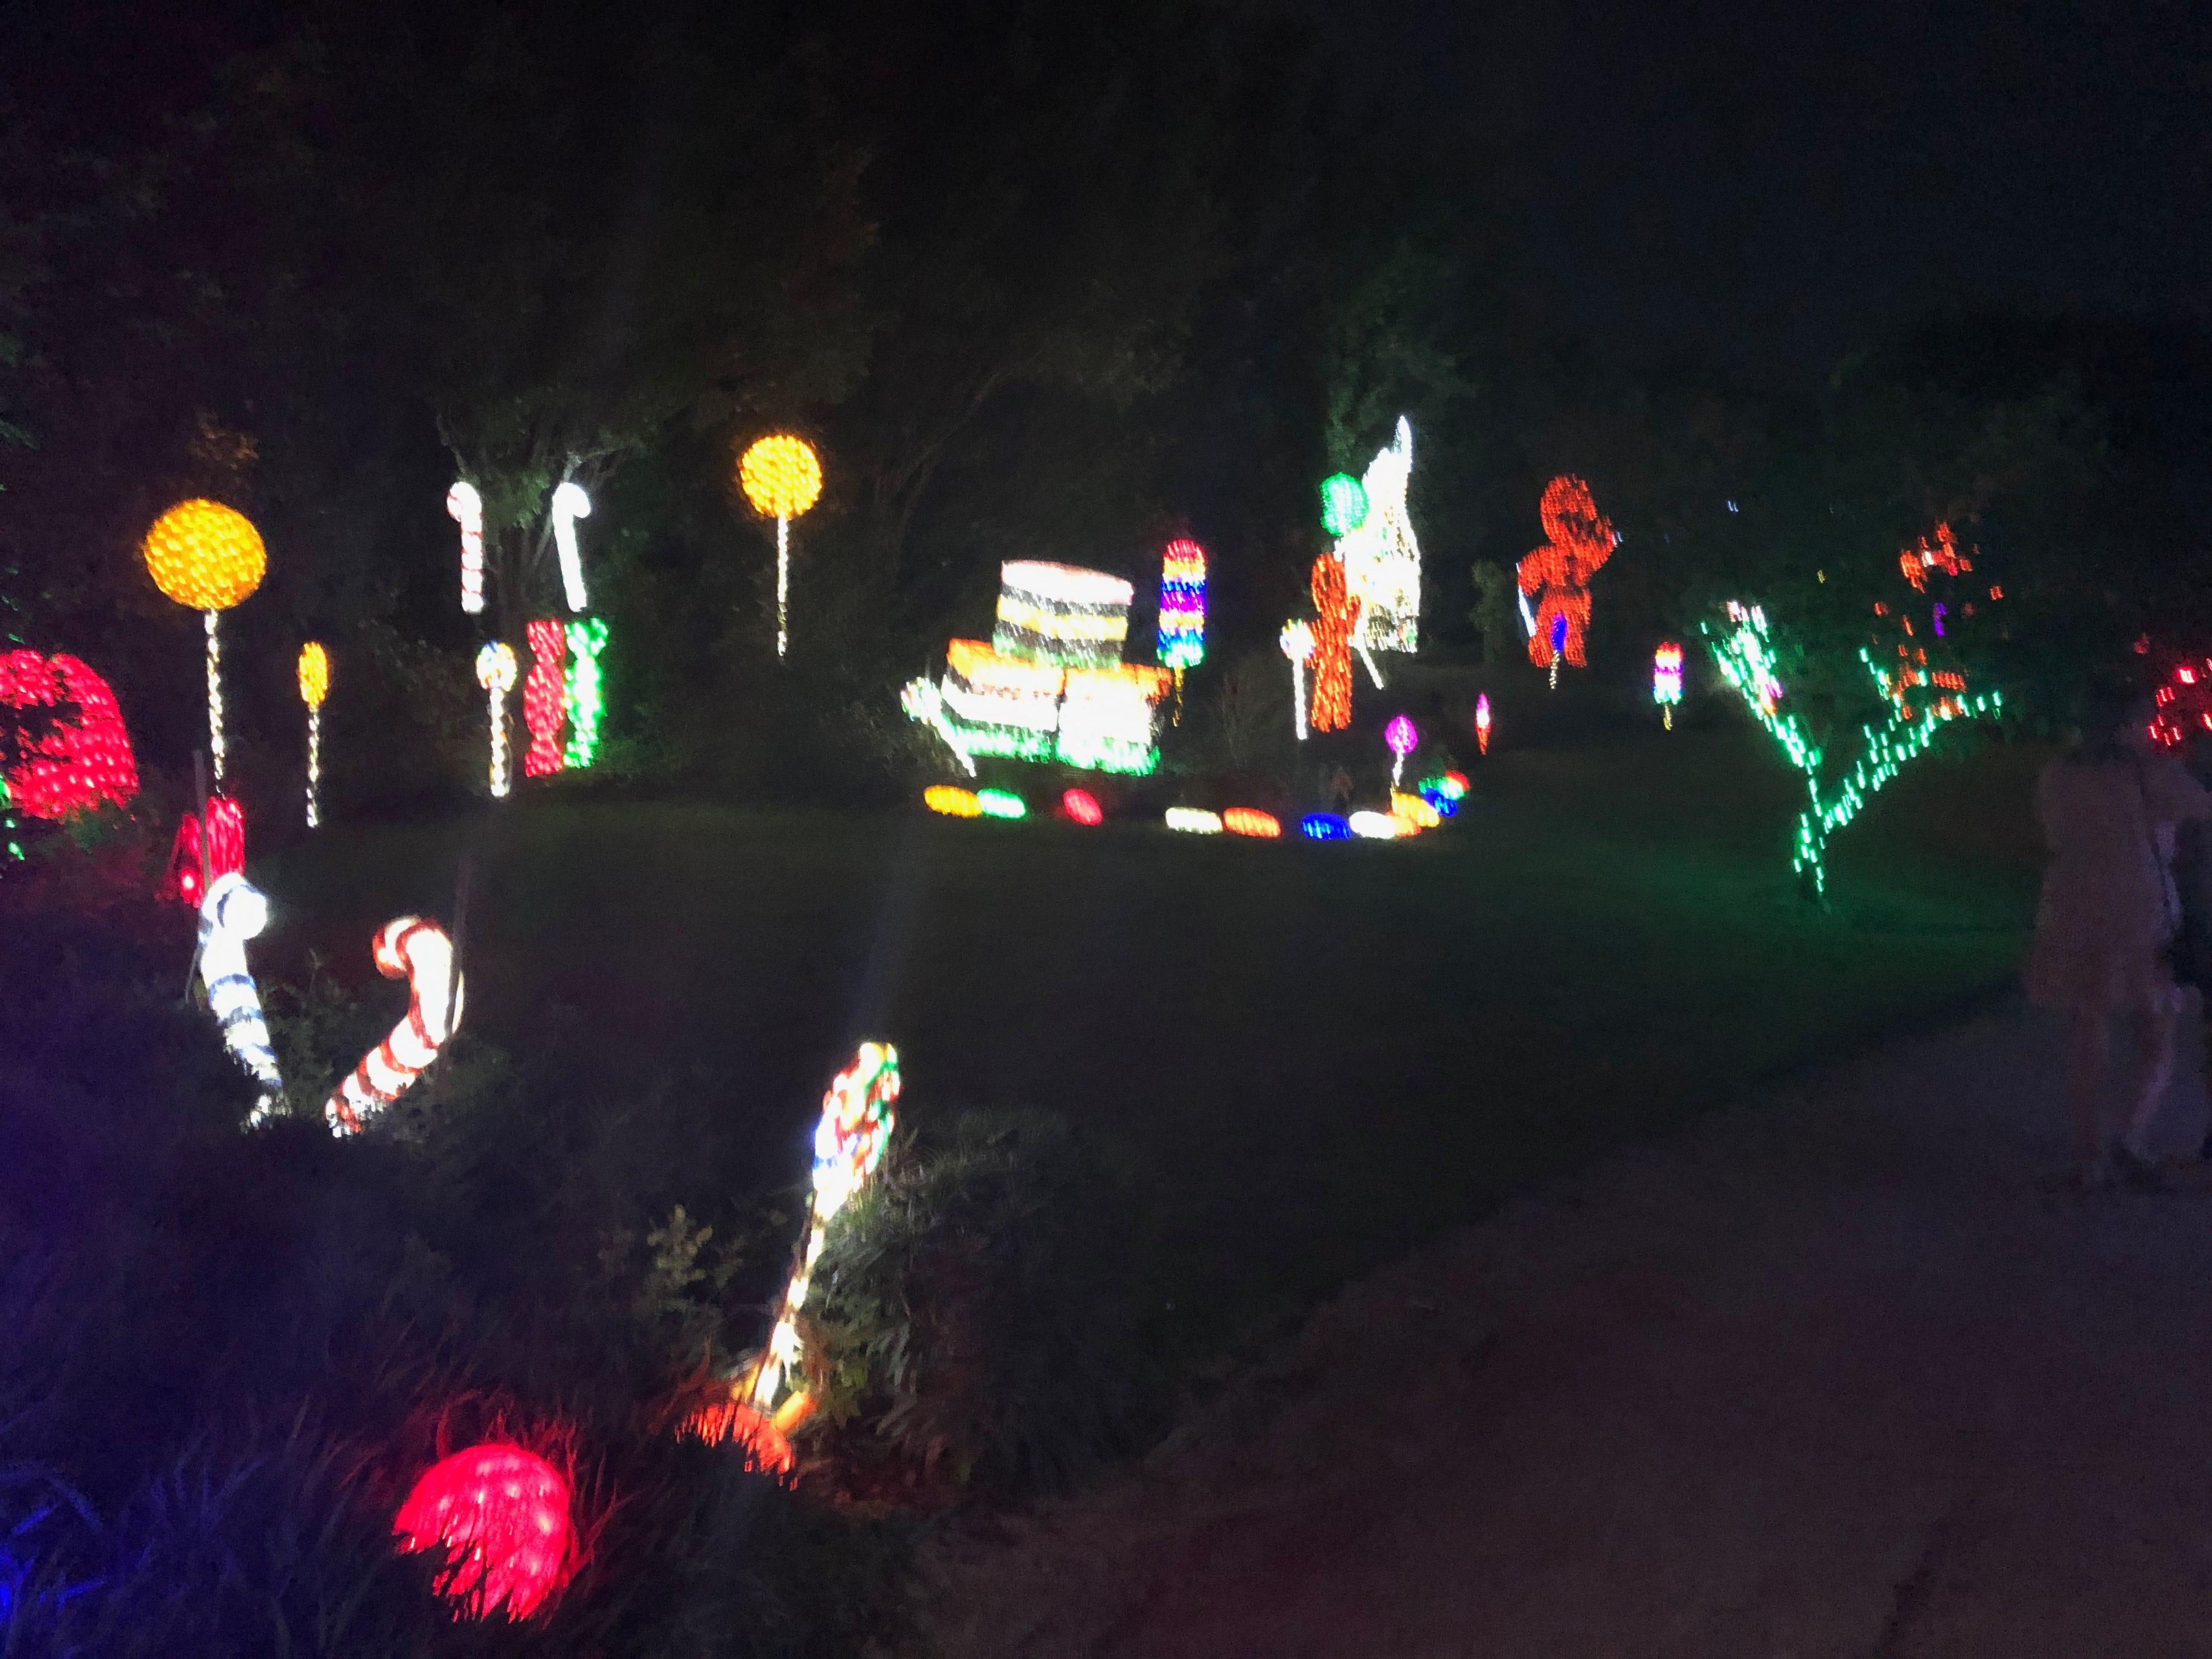 Hunter Valley Christmas Lights Spectacular 2019 Image -5e9b6f8f328d3